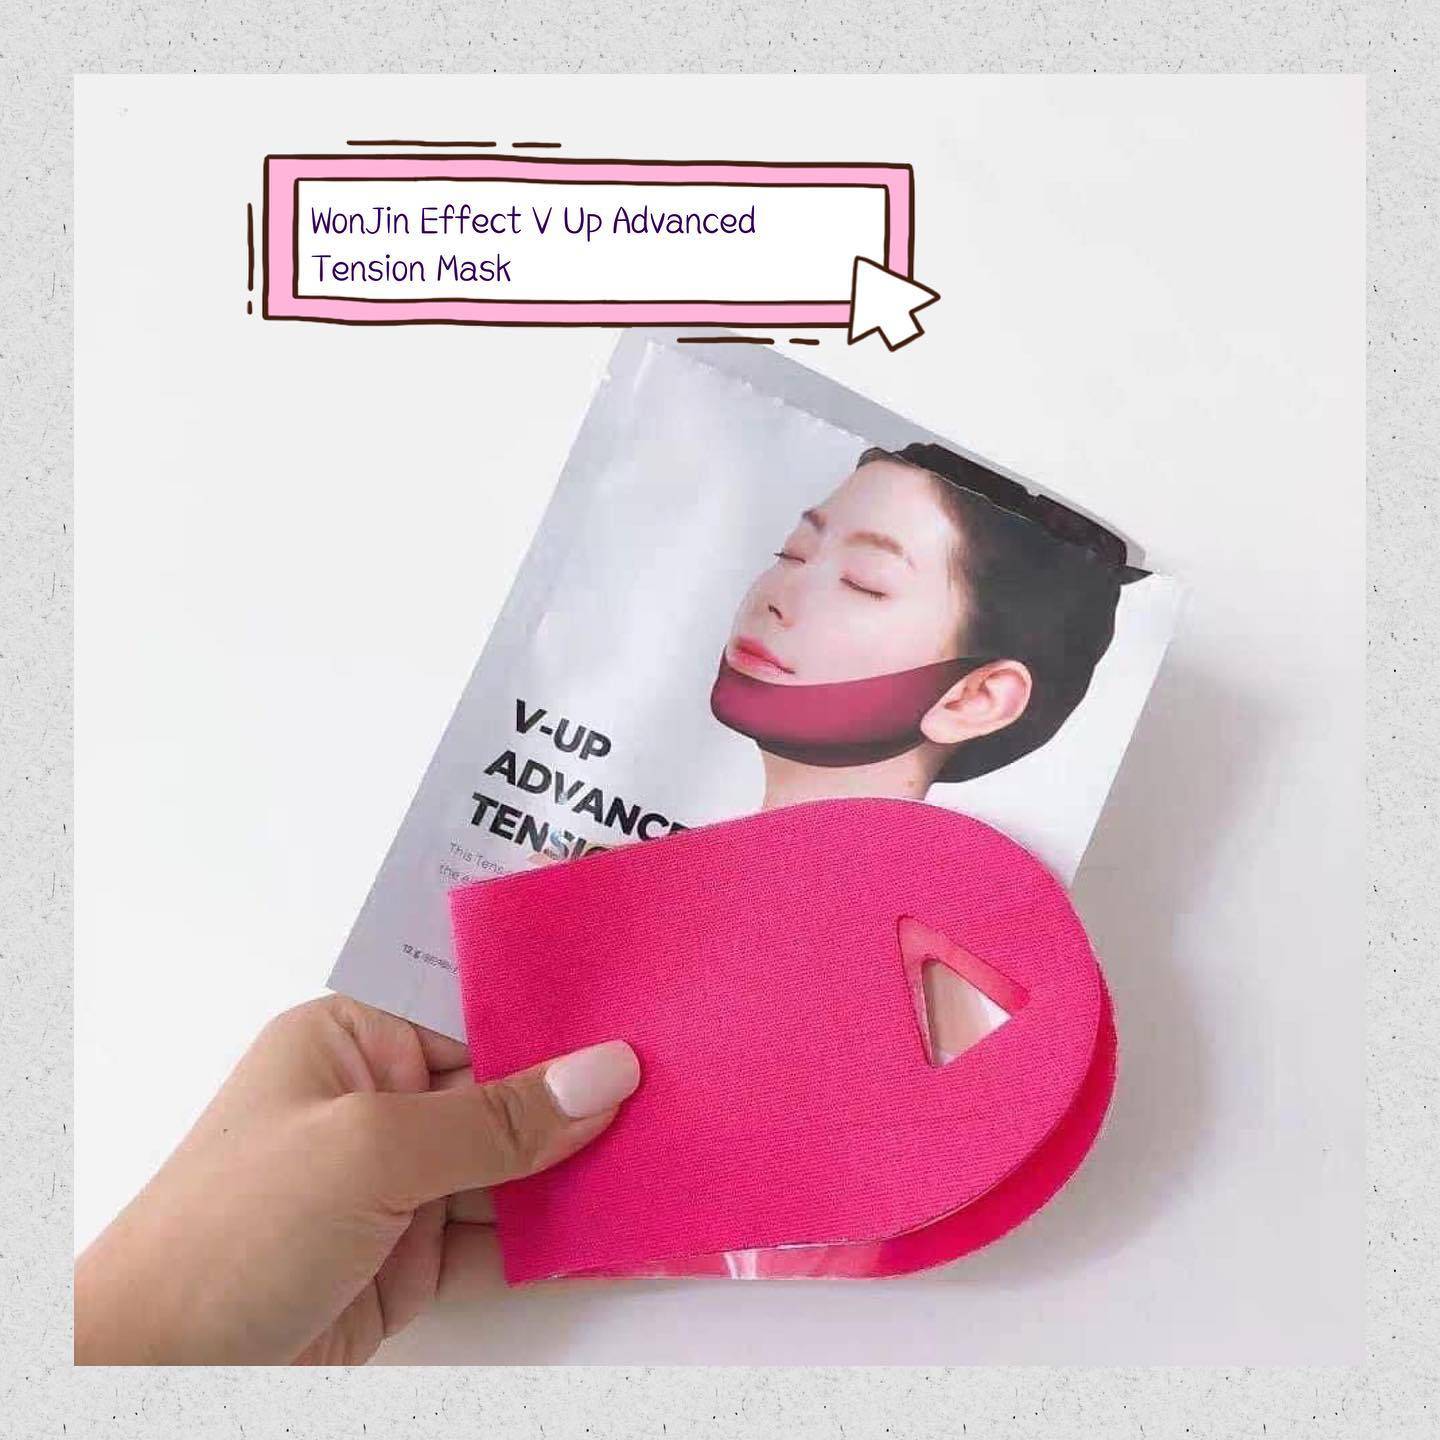 V-UP advanced tension mask by Wonjin